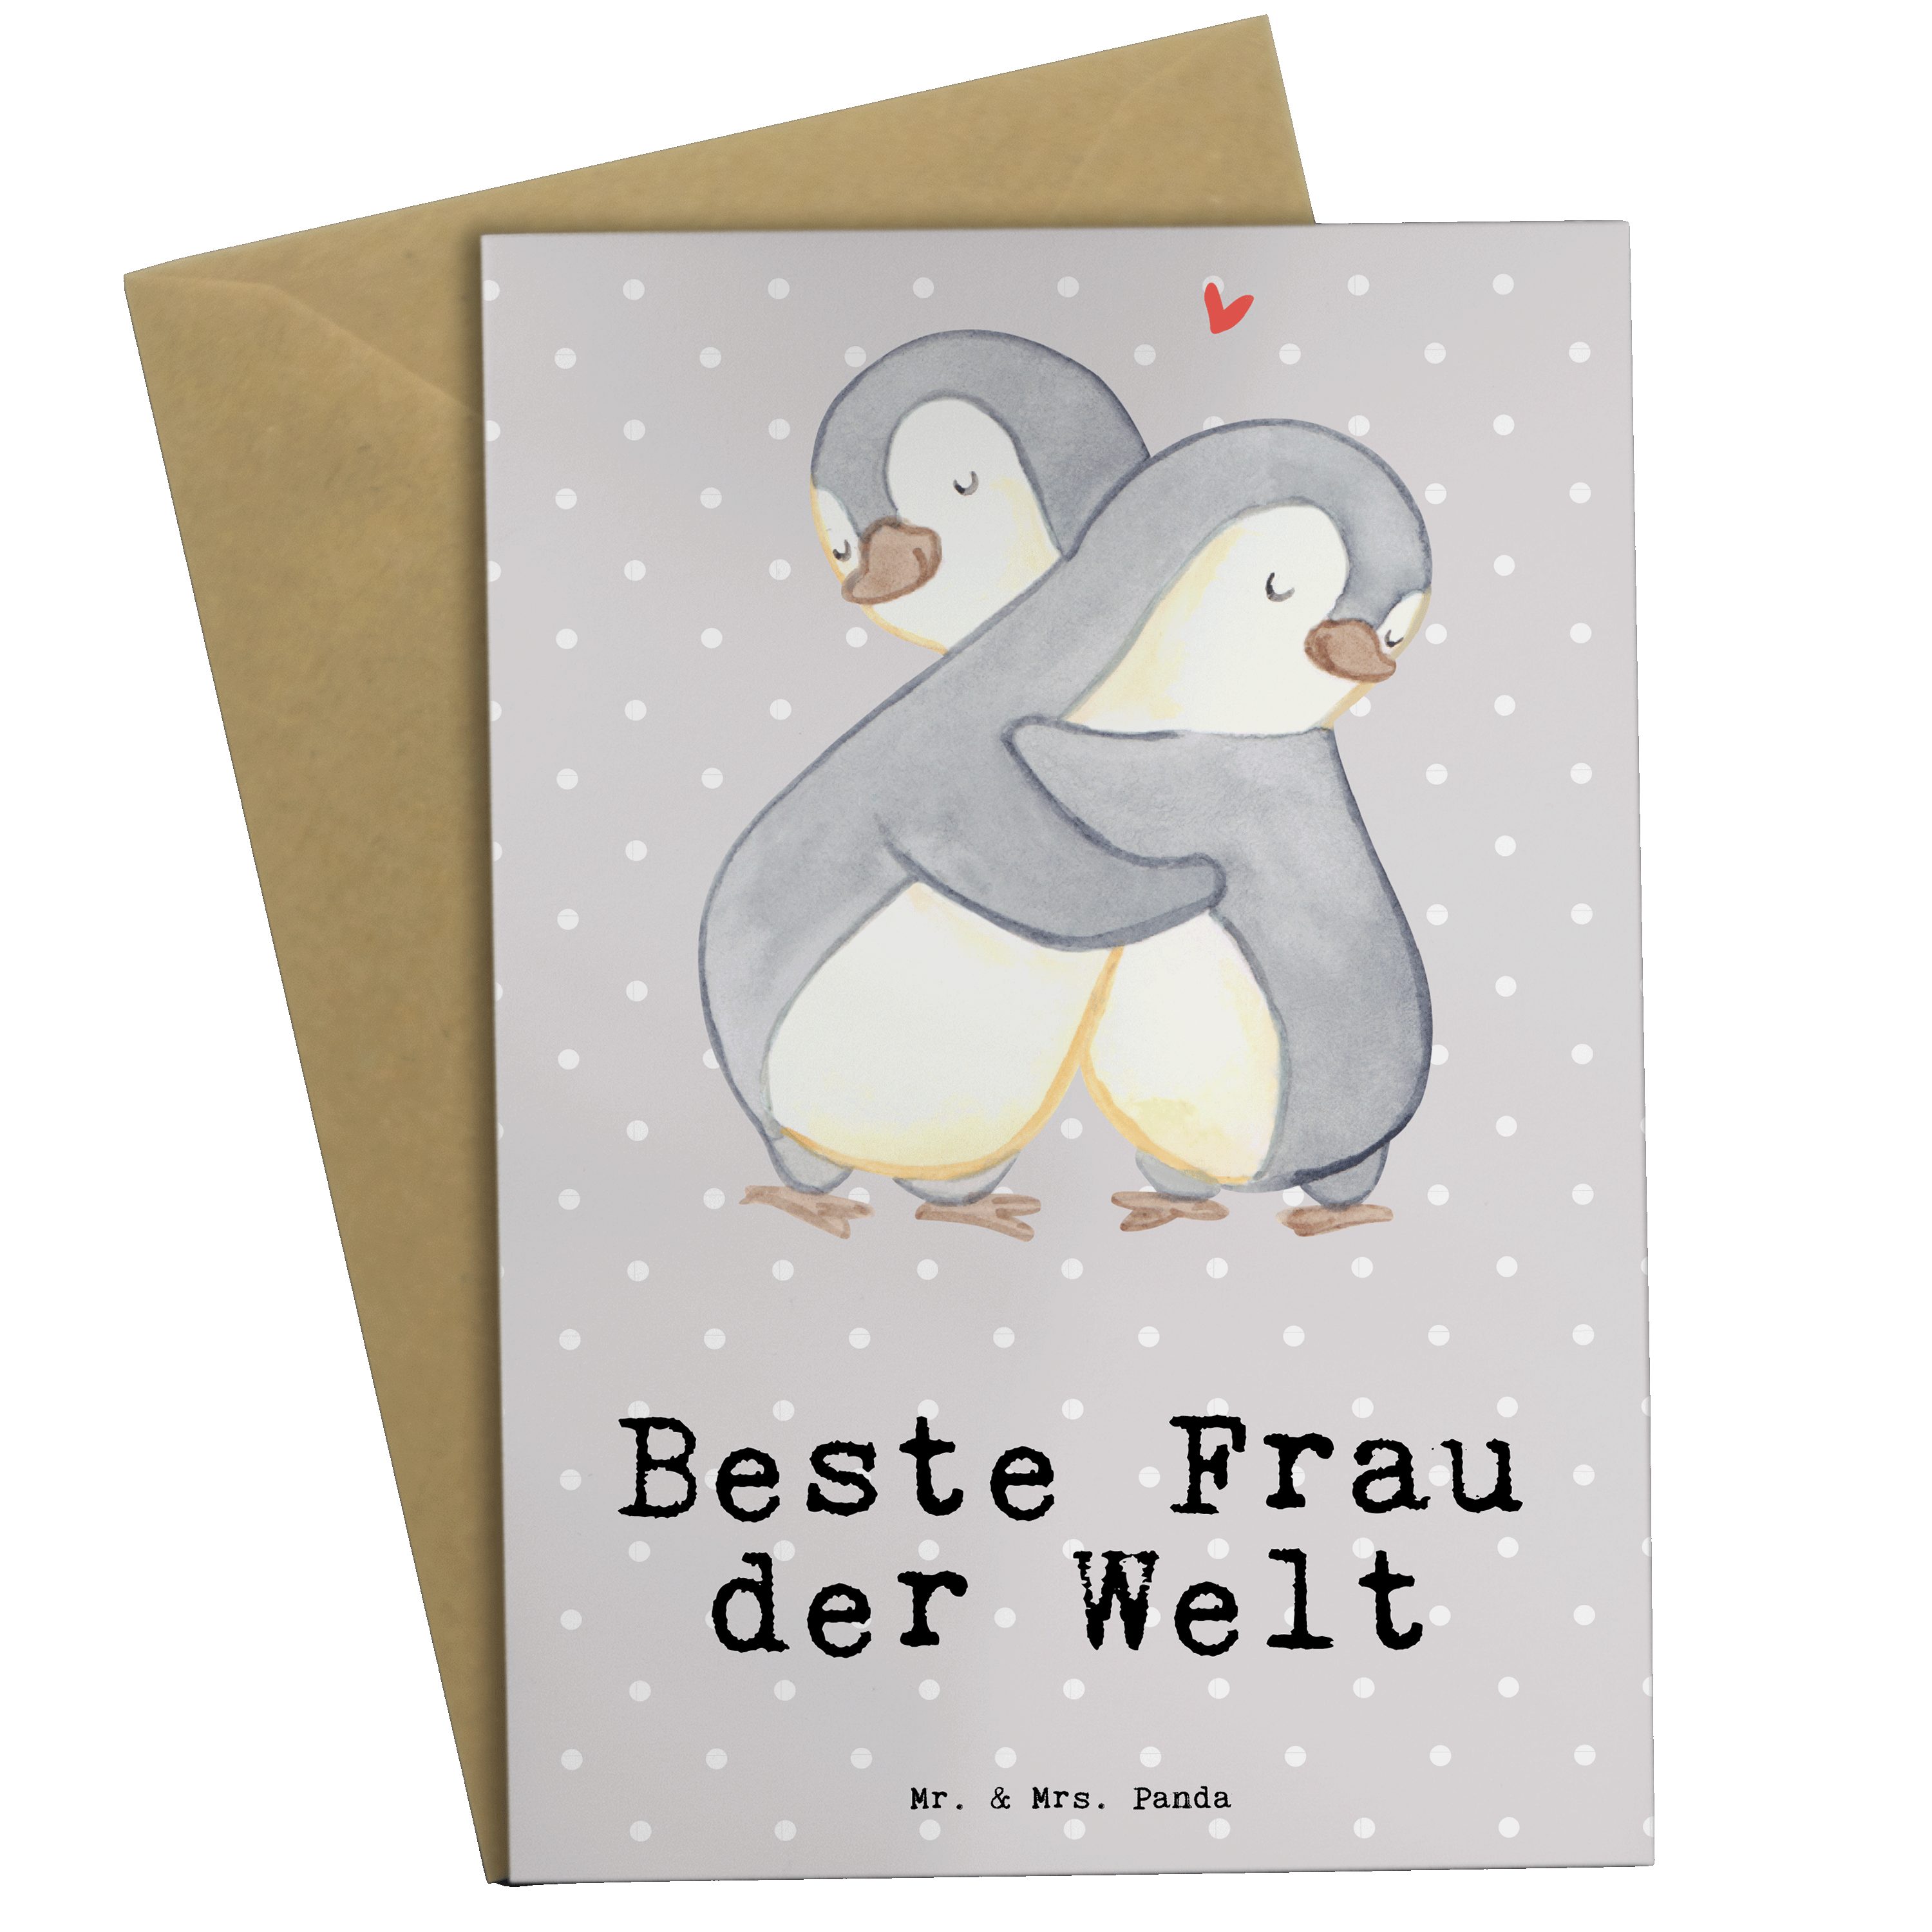 Mr. & Mrs. Panda Grußkarte Pinguin Beste Frau der Welt - Grau Pastell - Geschenk, Geburtstagskar